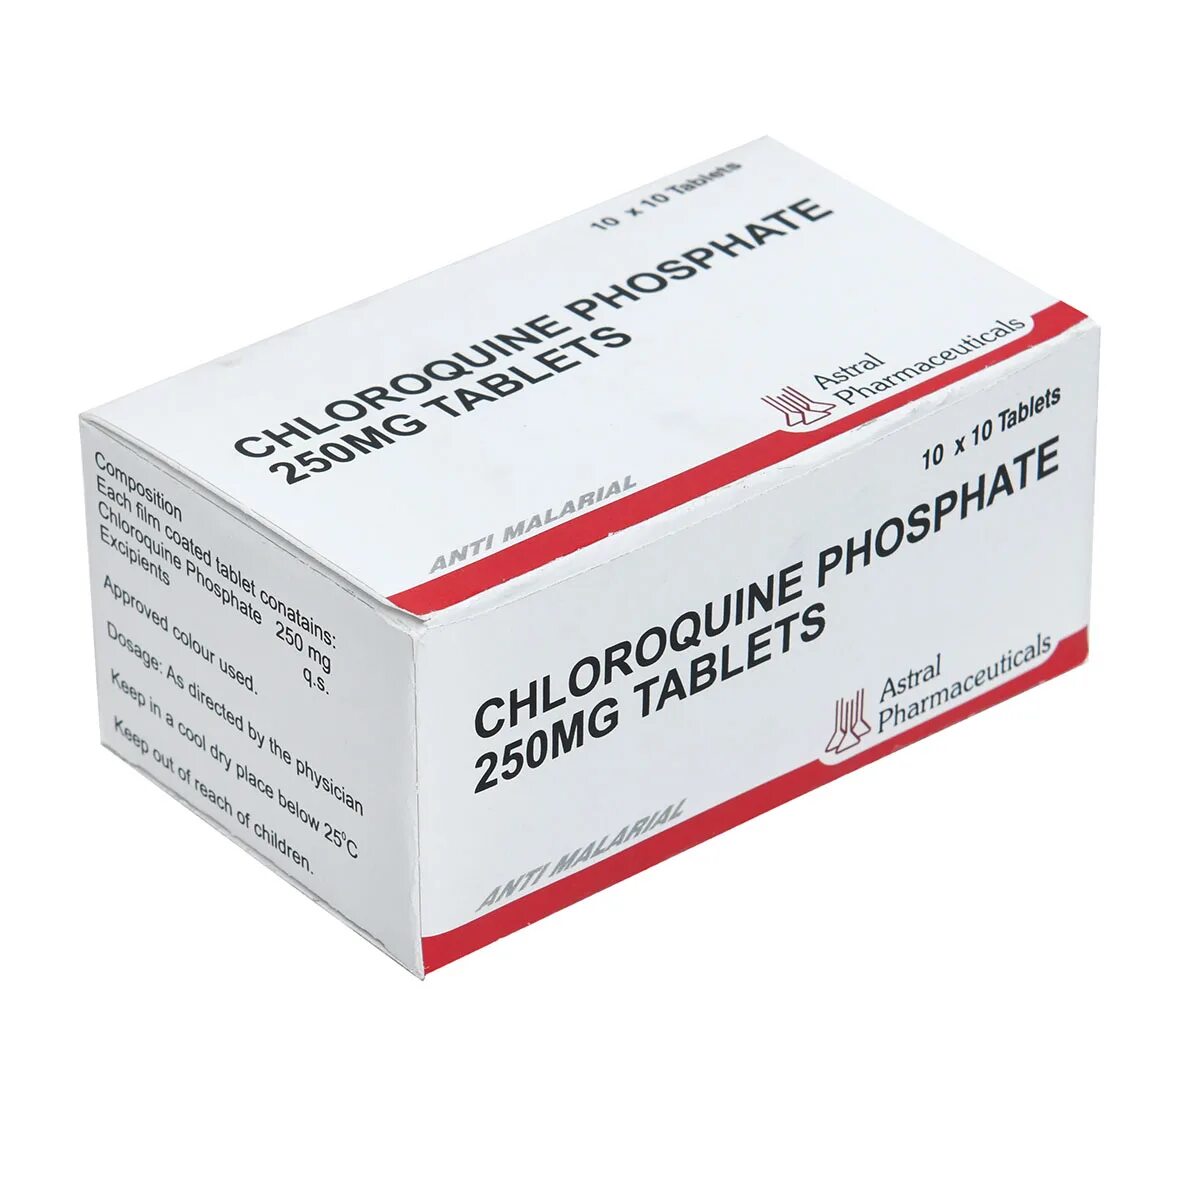 Хлоридин. Противомалярийный препарат хлор. Хлорохин препараты. Препарат от малярии хлорохин. Хлорохин 250.